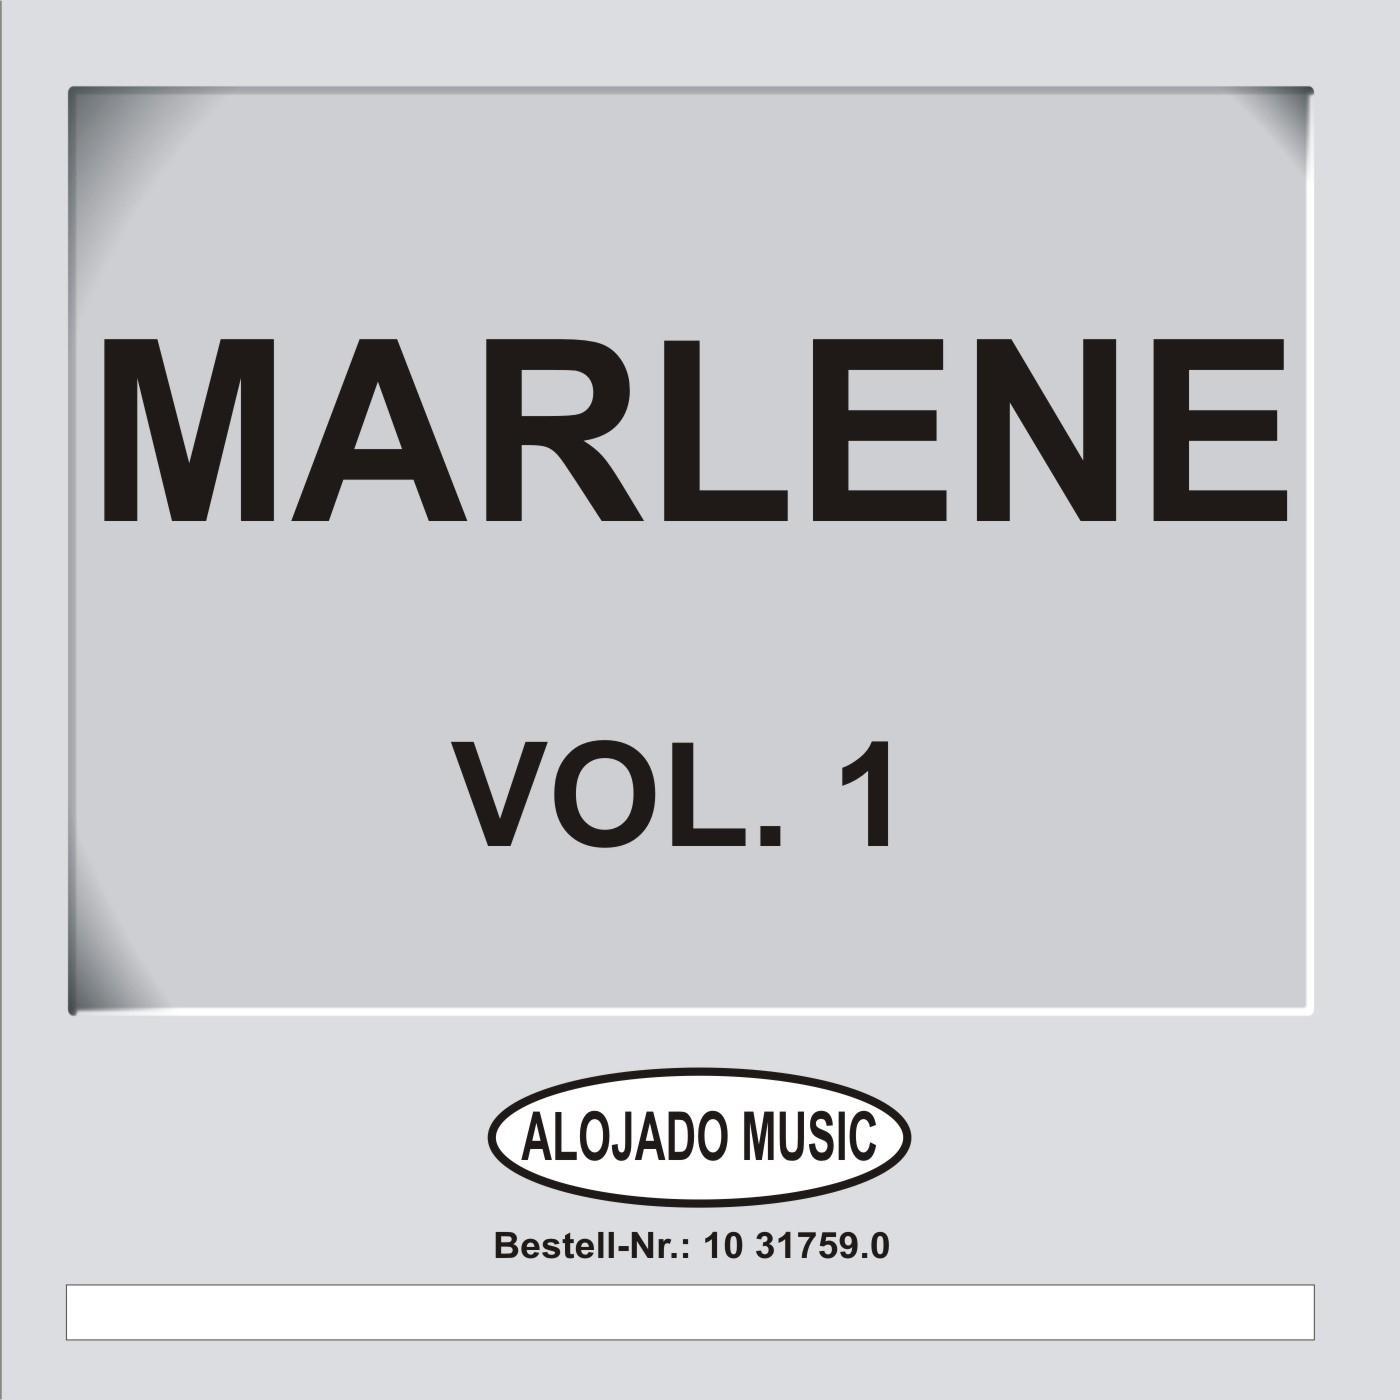 Marlene Vol. 1